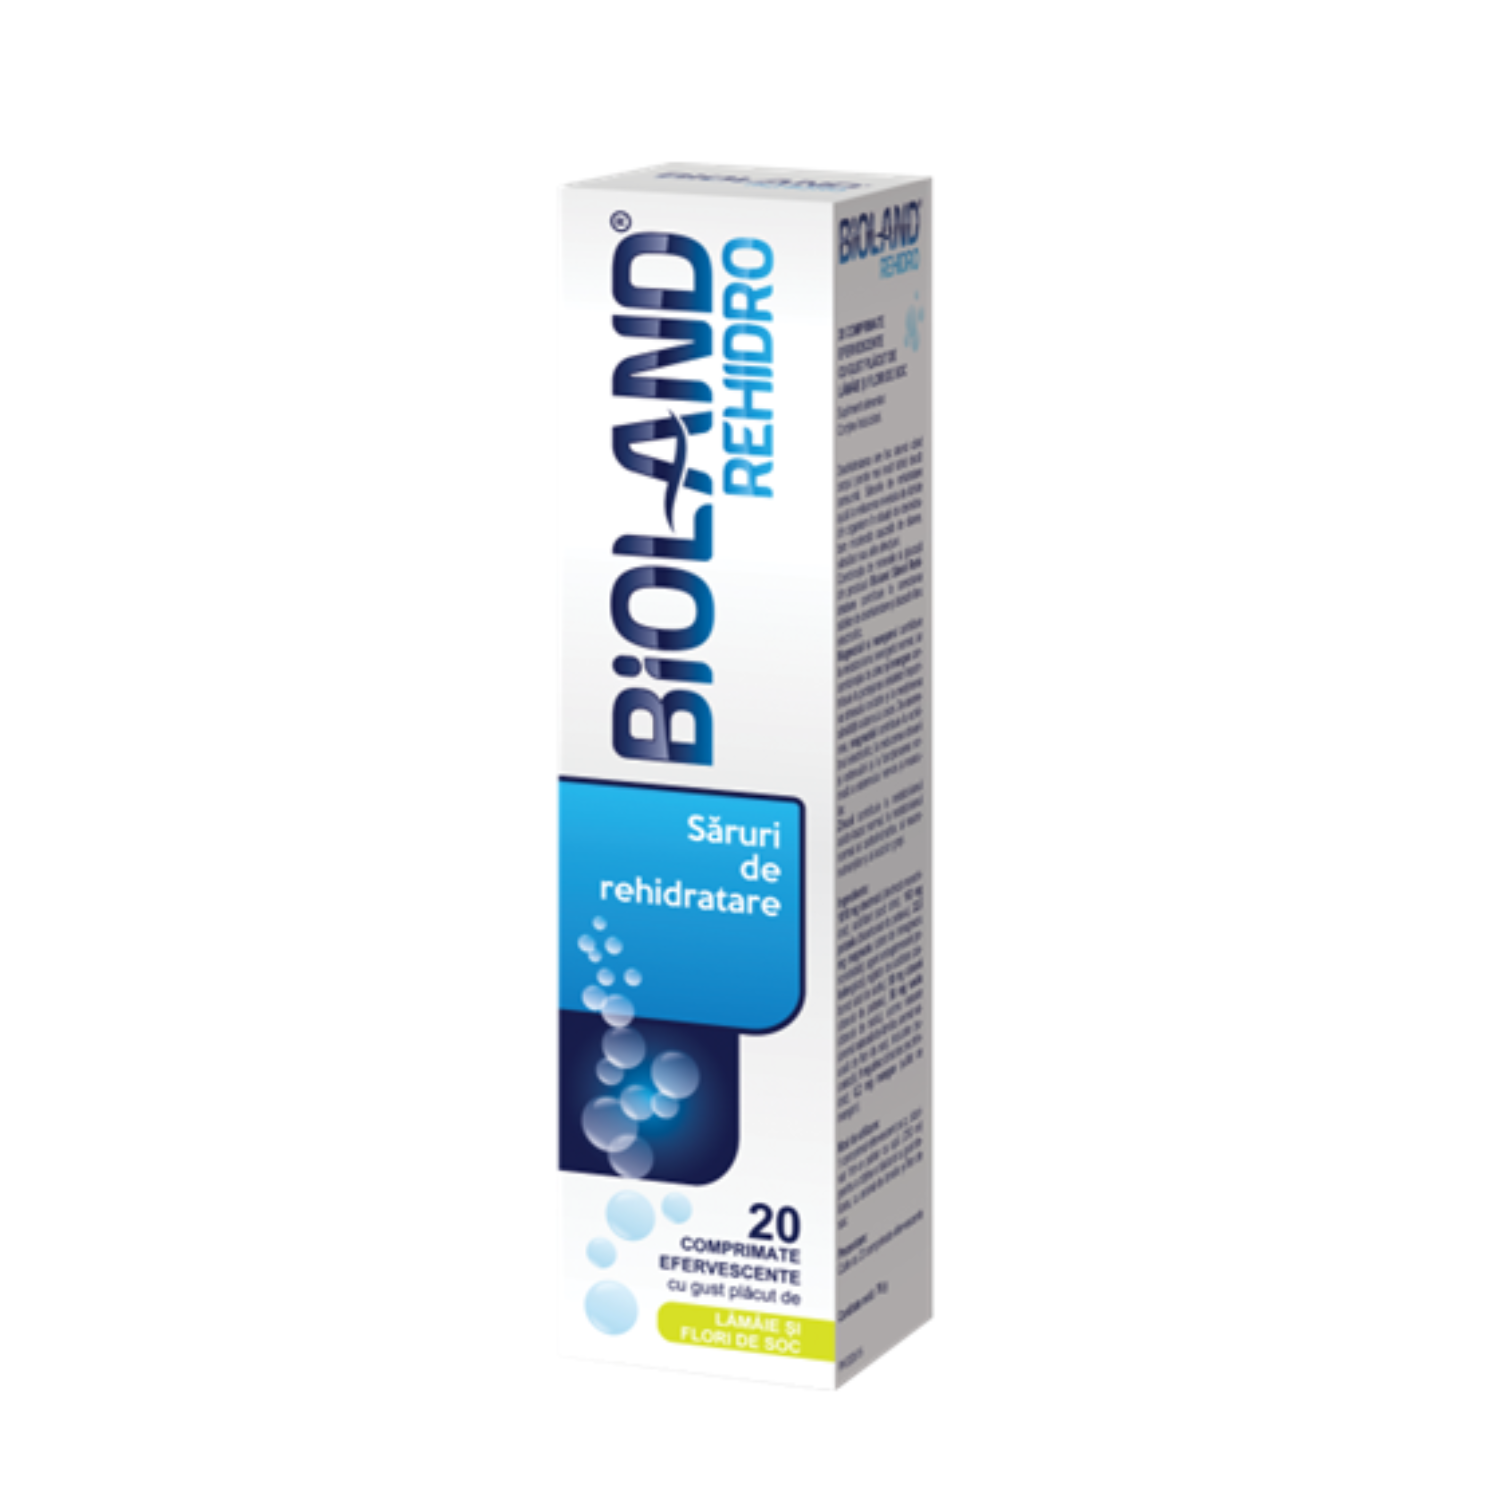 Saruri de rehidratare Rehidro, 20 comprimate efervescente, Bioland